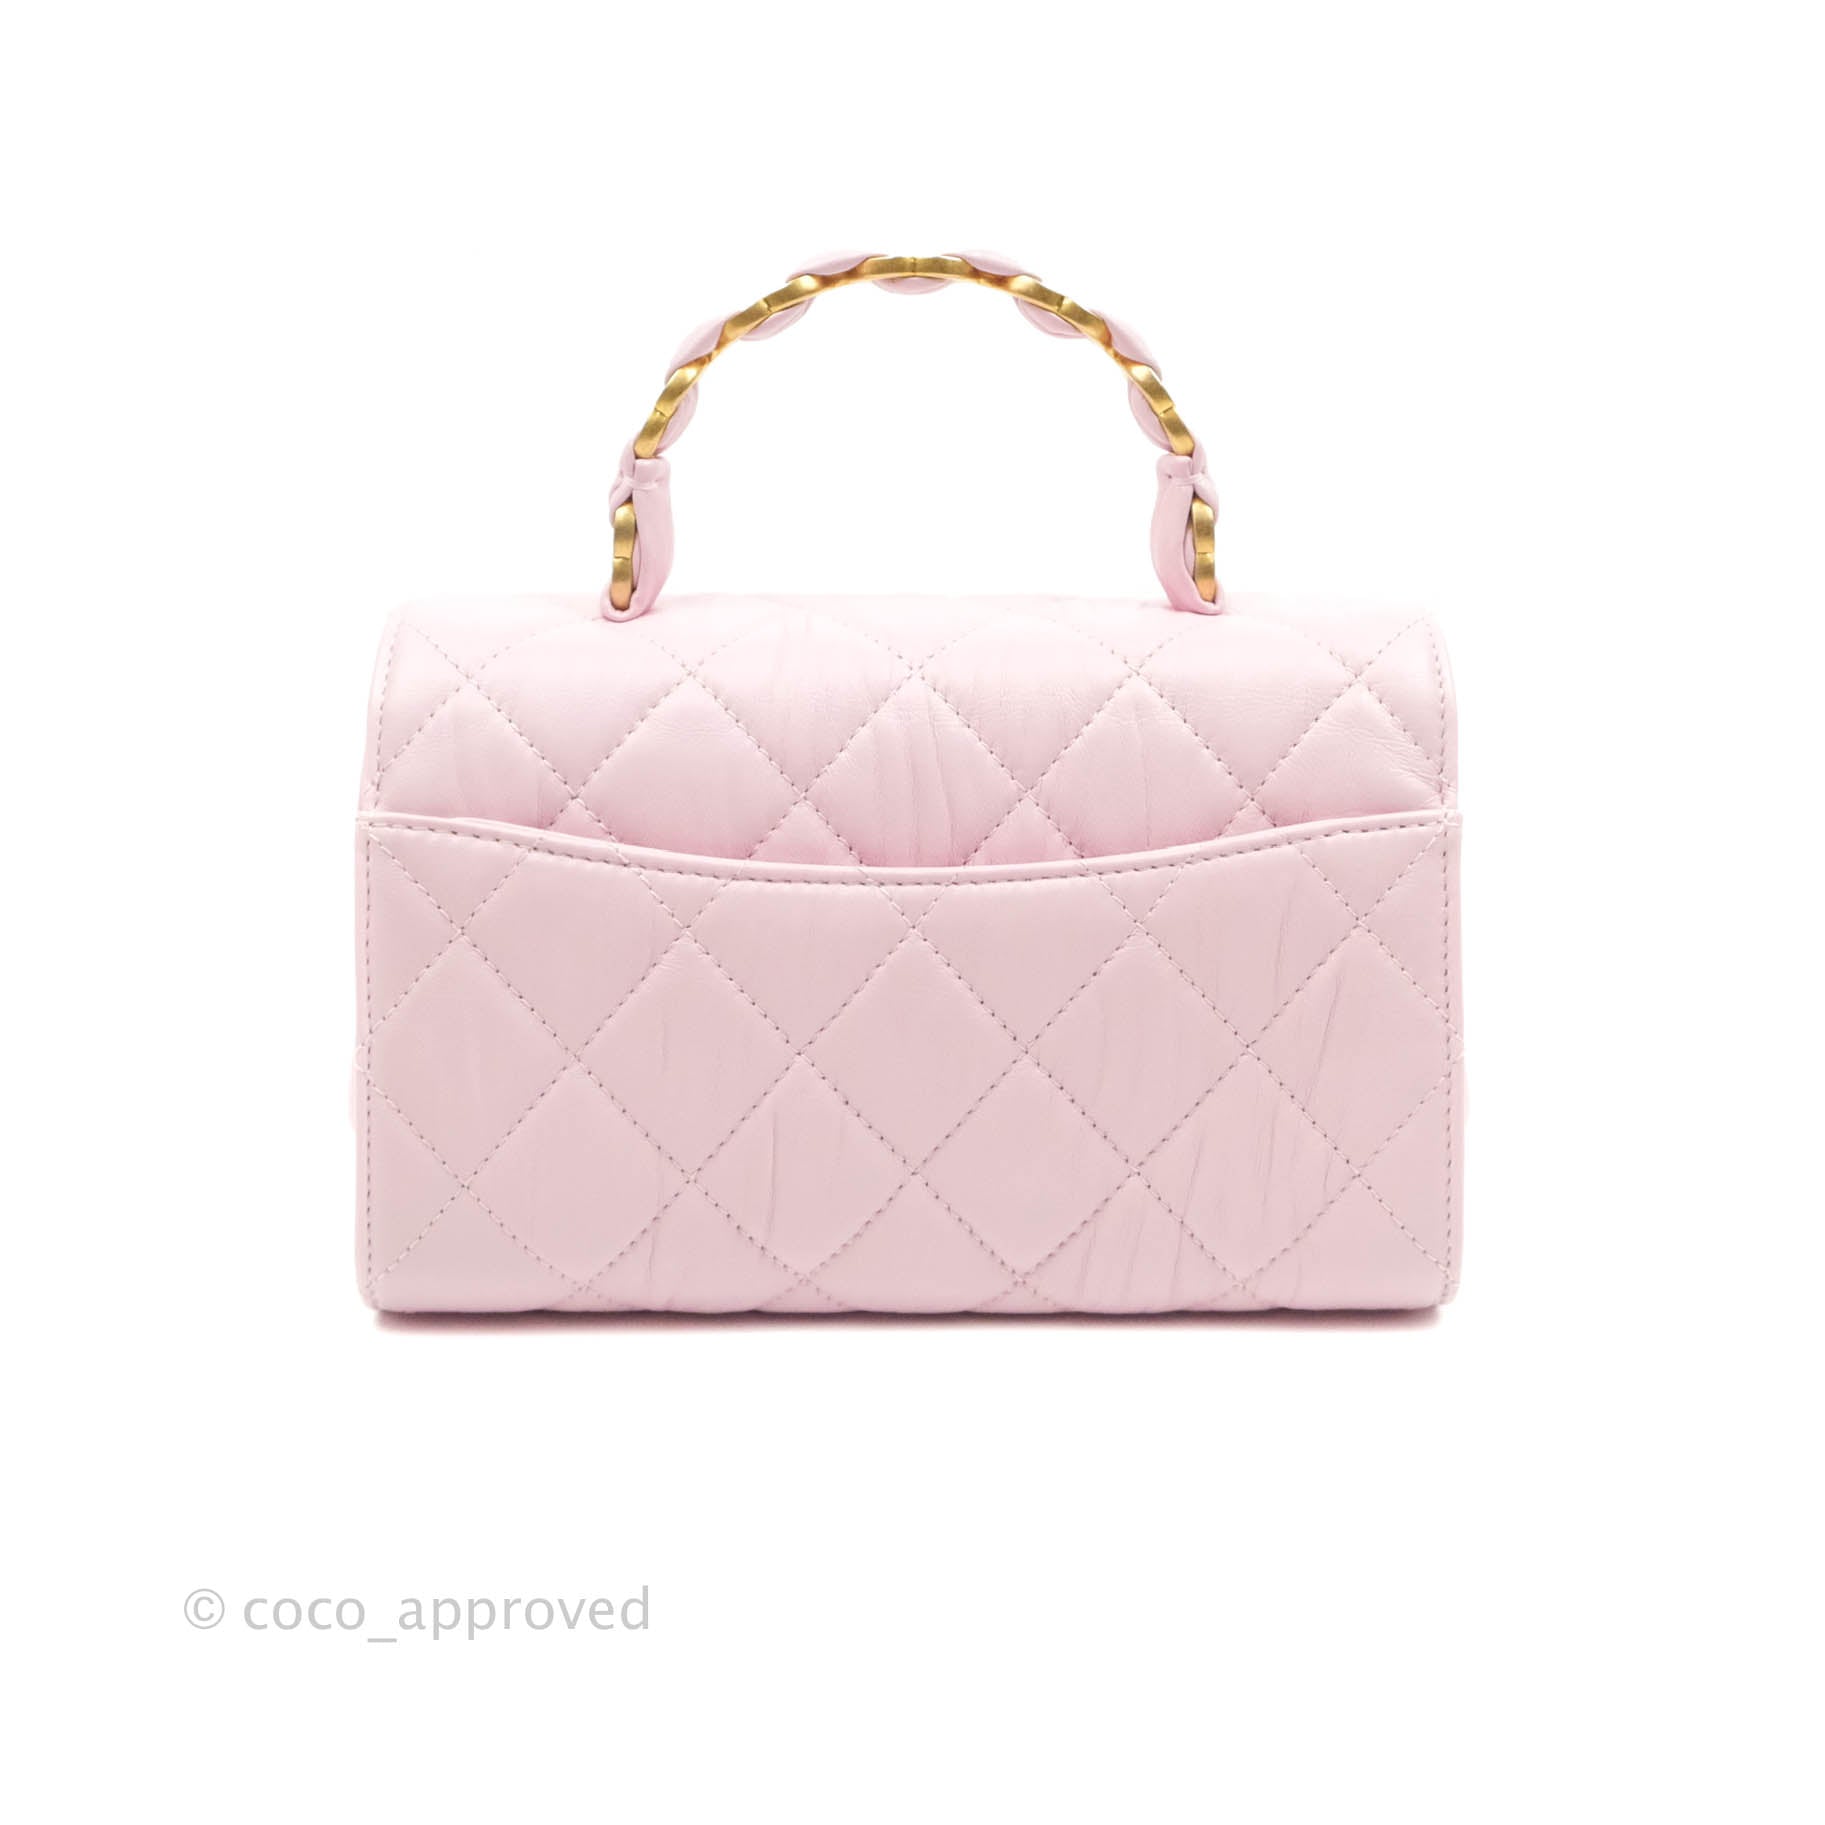 Chanel Kelly Handbag - 55 For Sale on 1stDibs